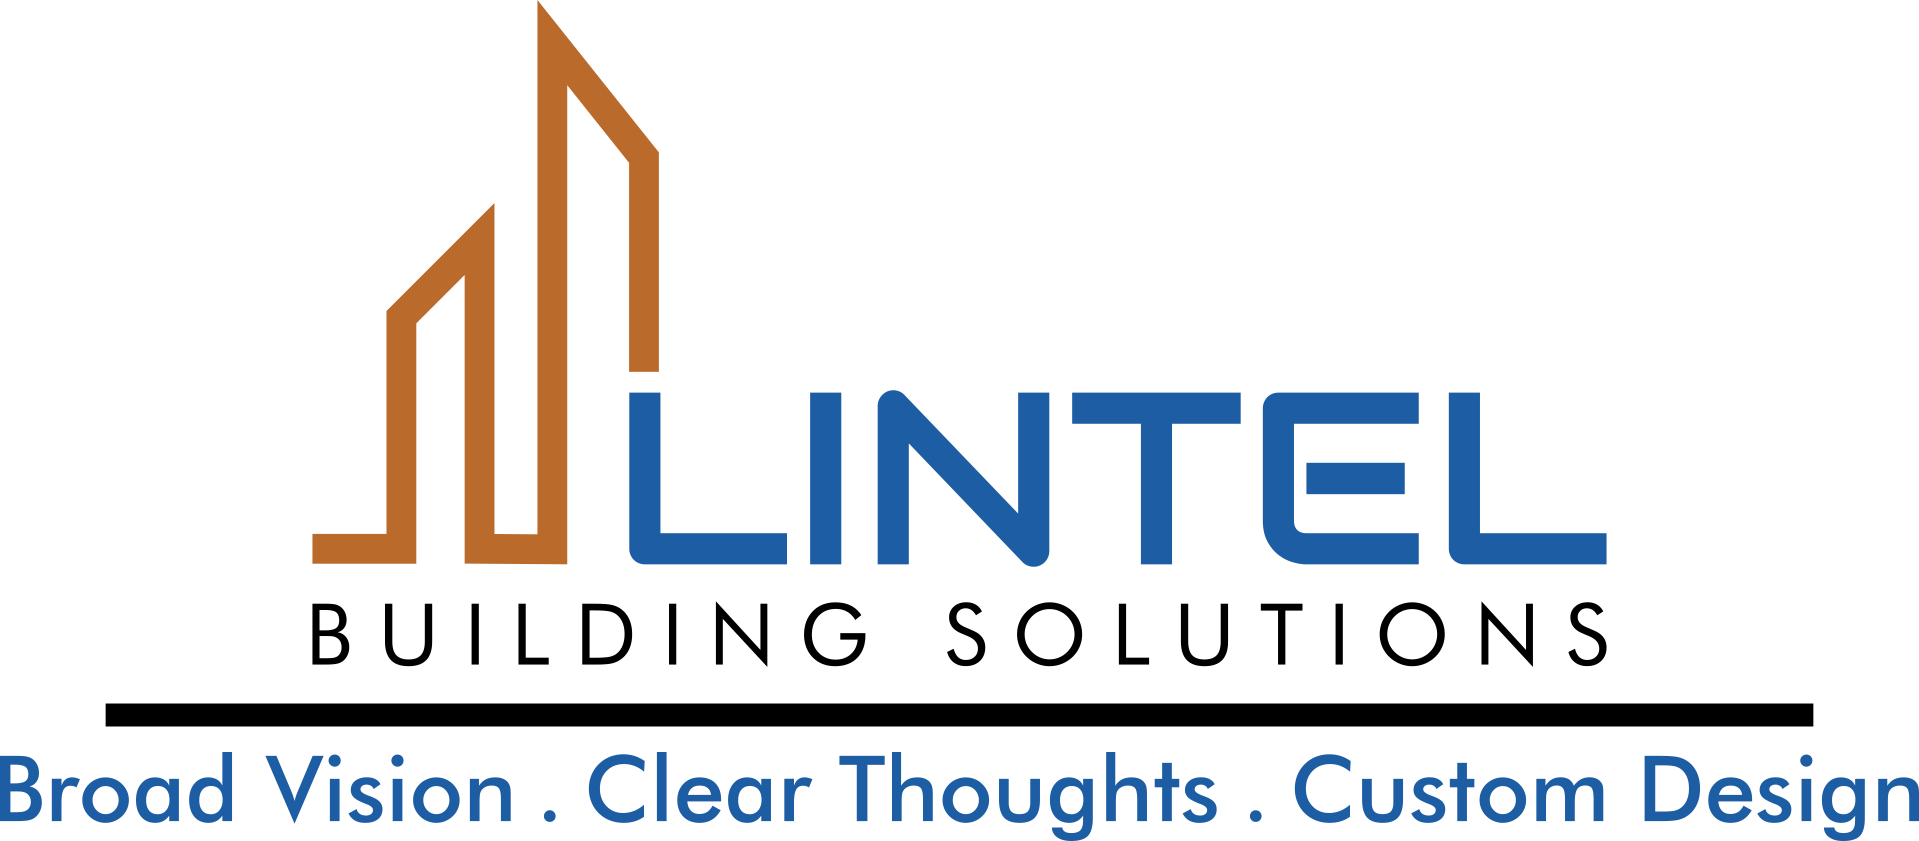 Lintel Building Solutions